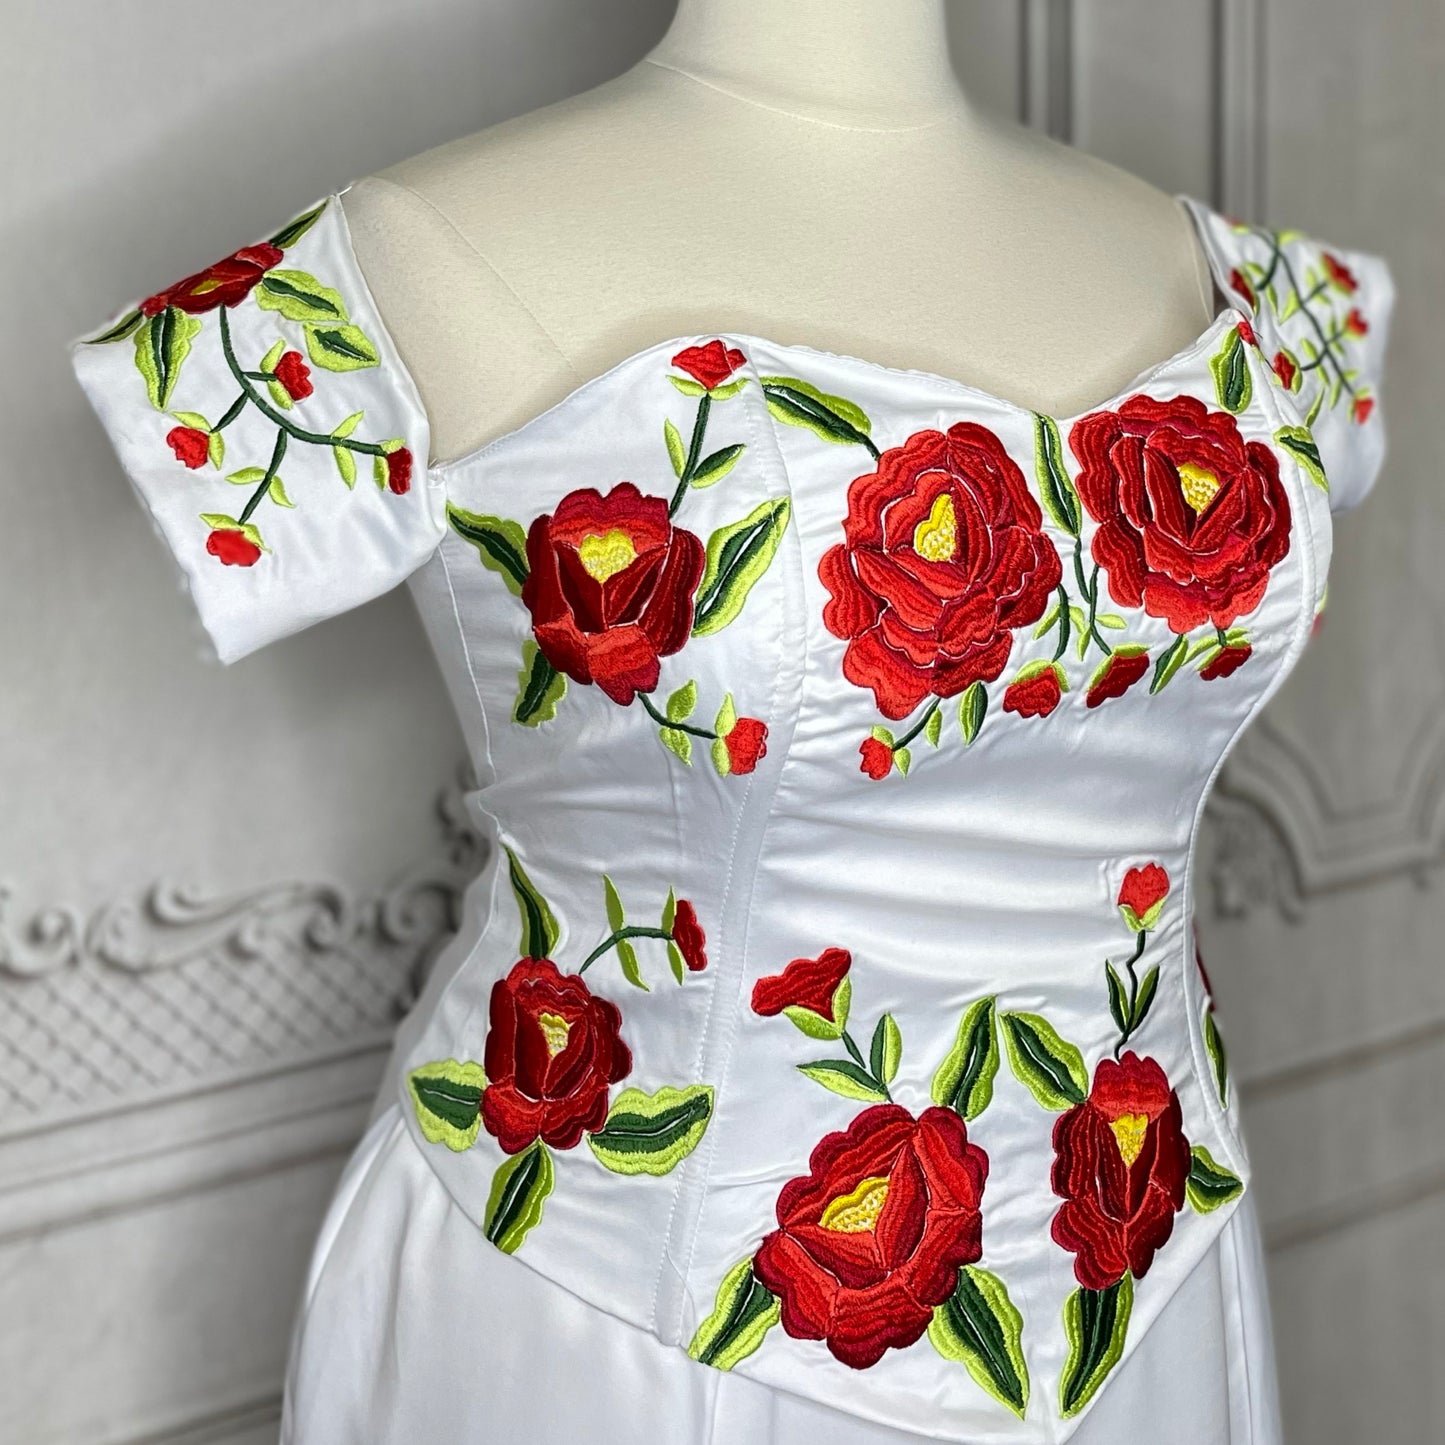 Embroidered Mexican Evening Dress - Maria Bonita